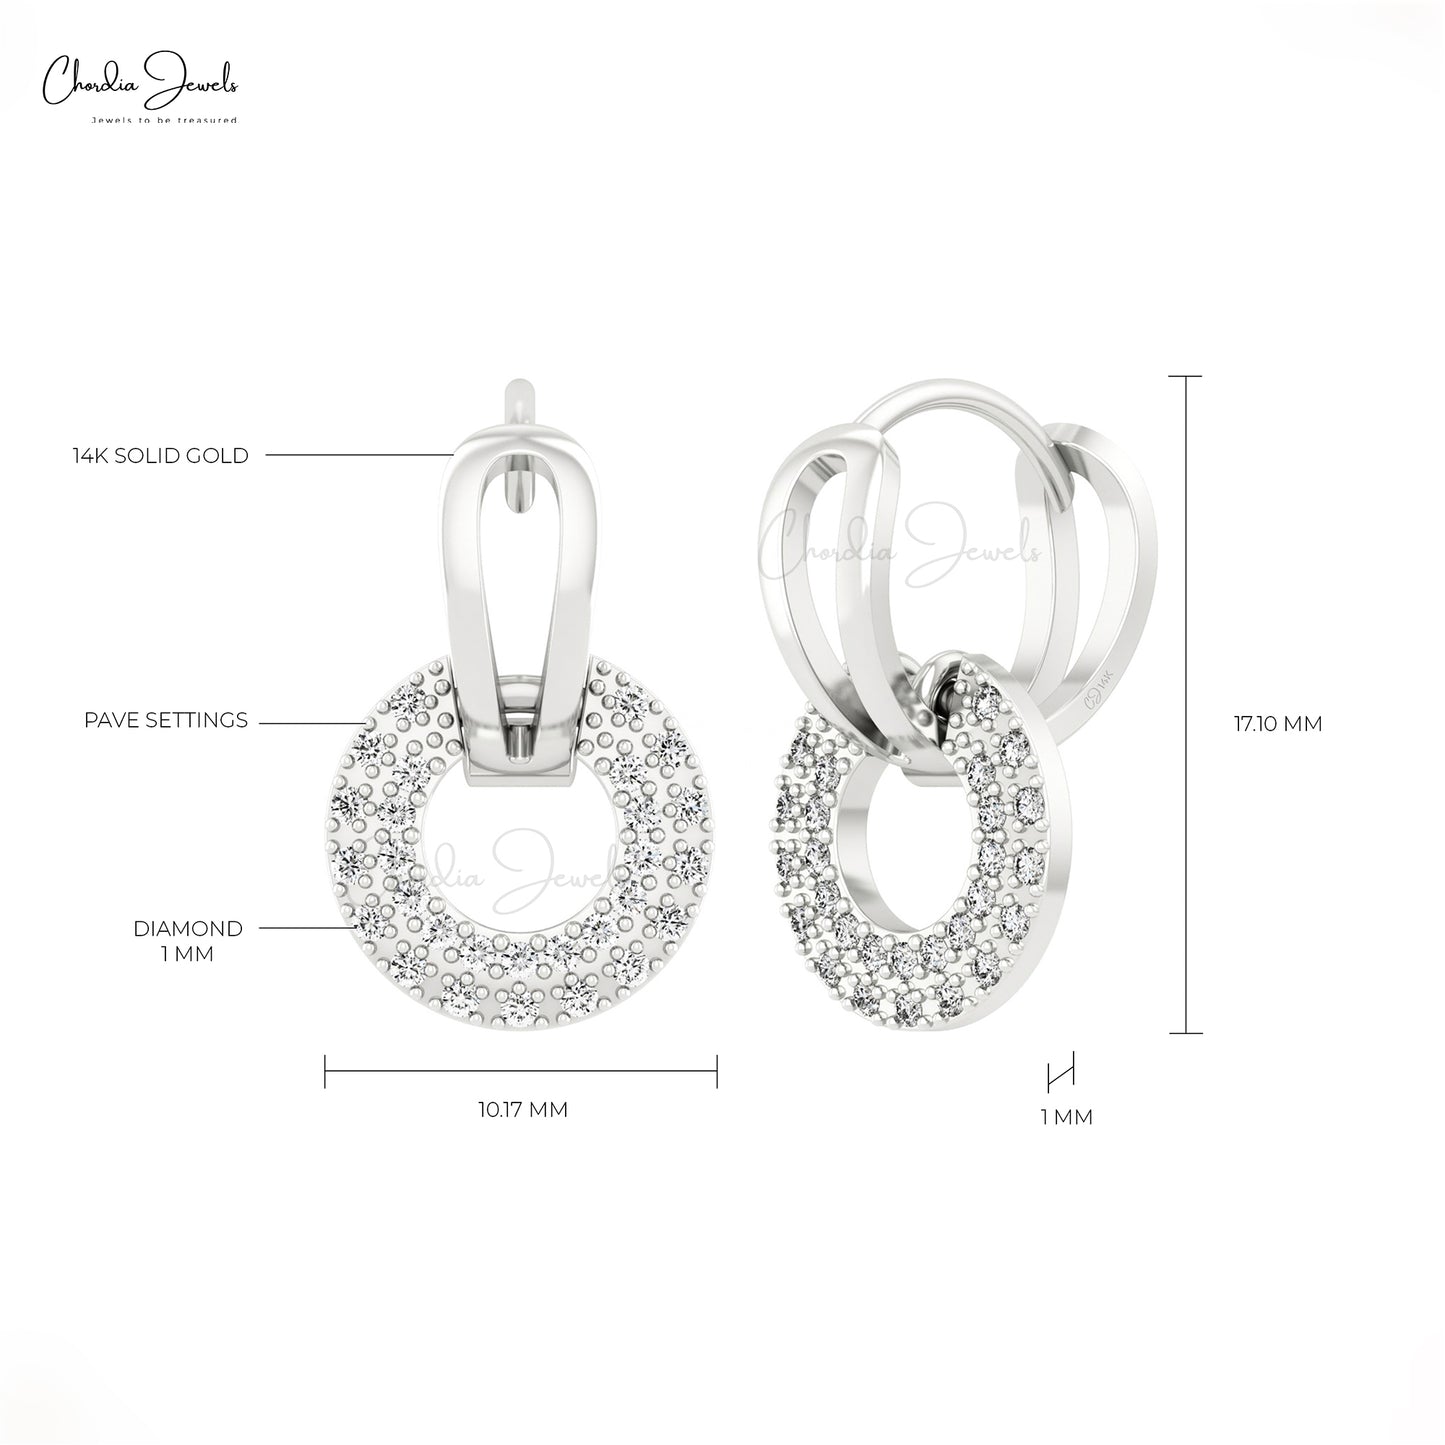 Double Link White Diamond Huggies Earrings 14k Solid Gold Hinge Back Earring Gift For Wife